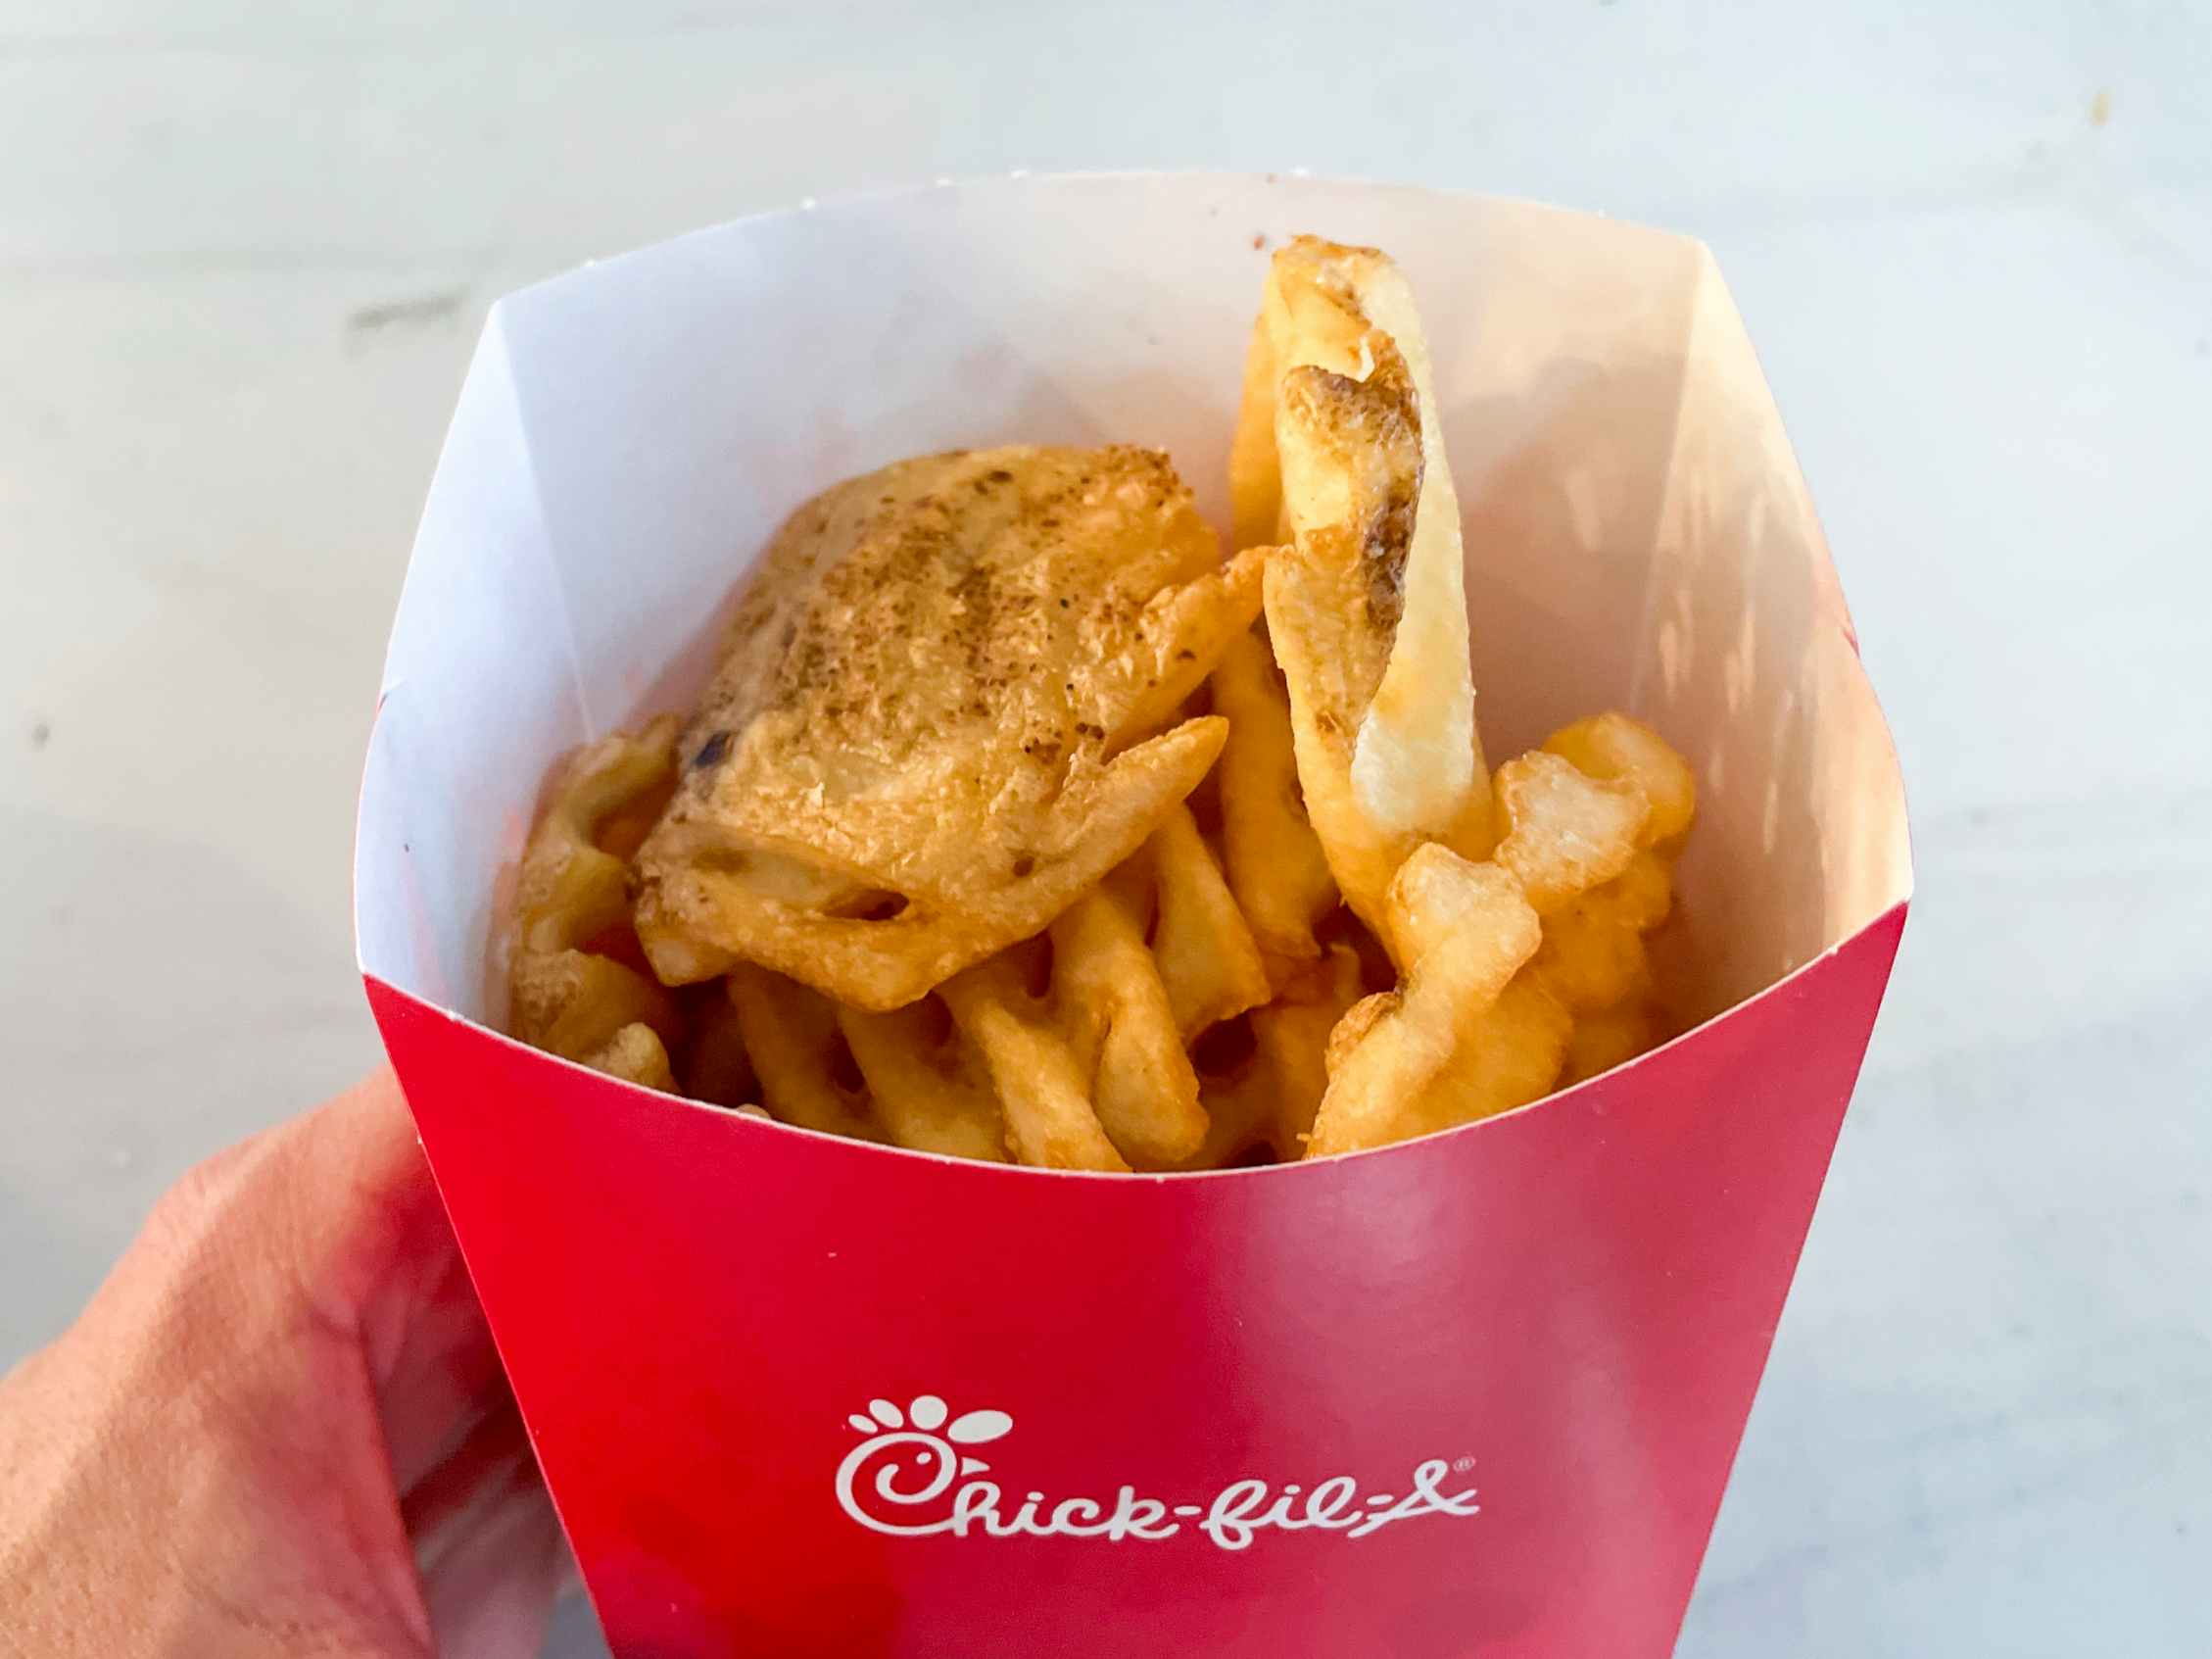 chick-fil-a-secret-menu-extra-crispy-fries-2021-18